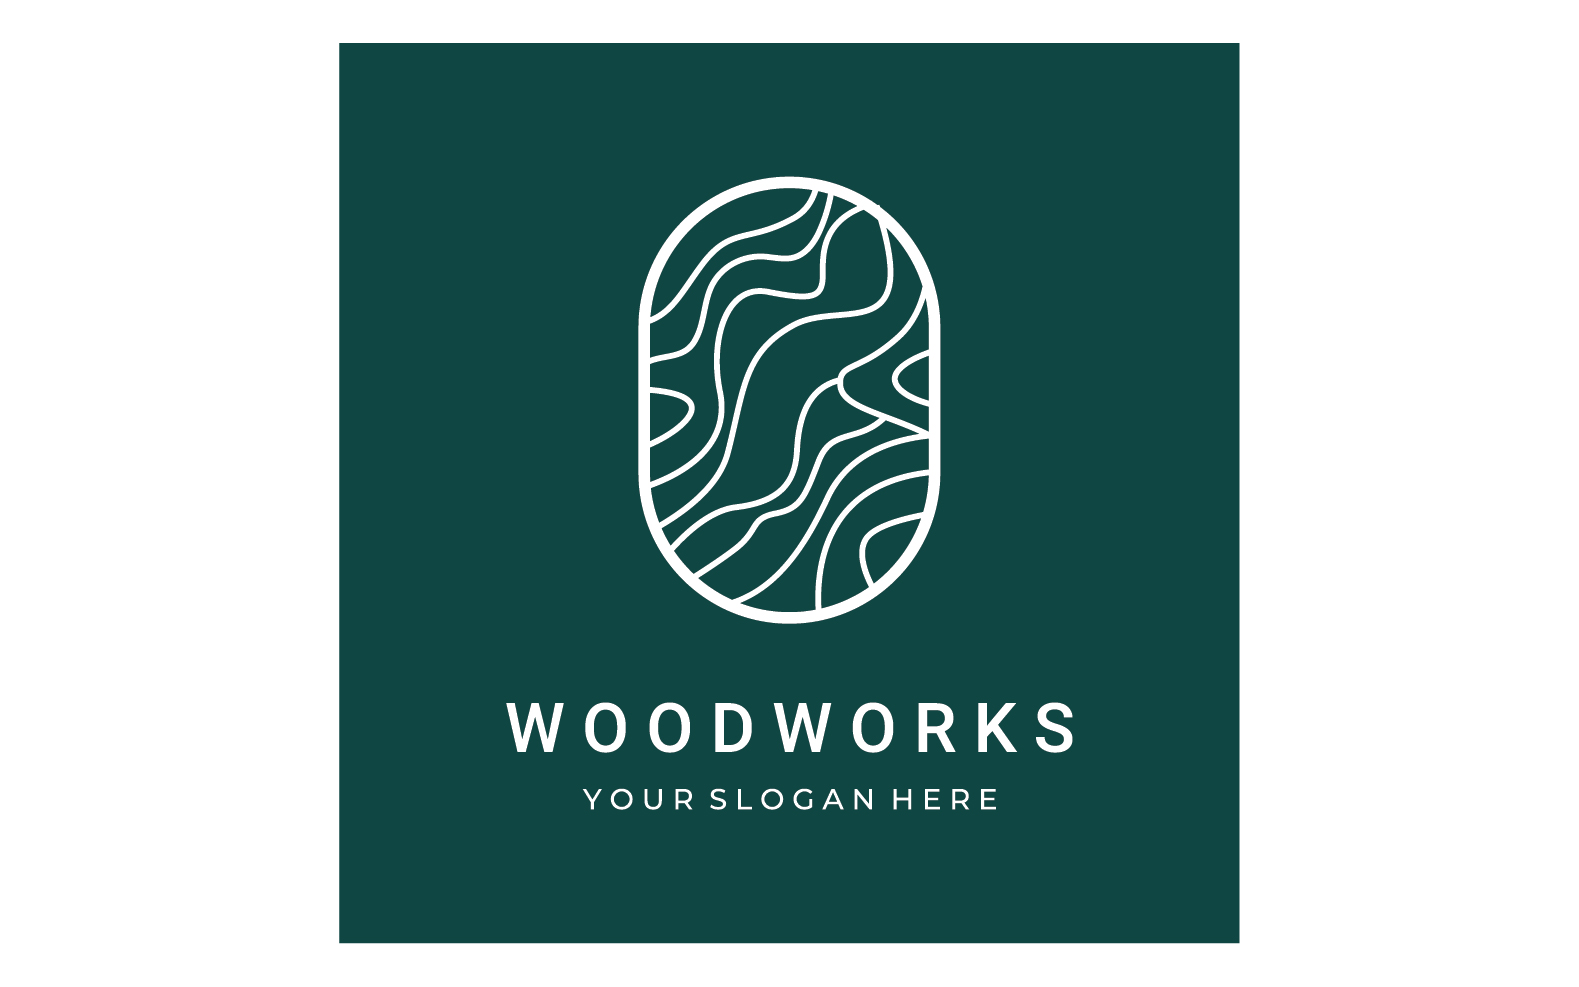 Wooden furniture work logo vector 5